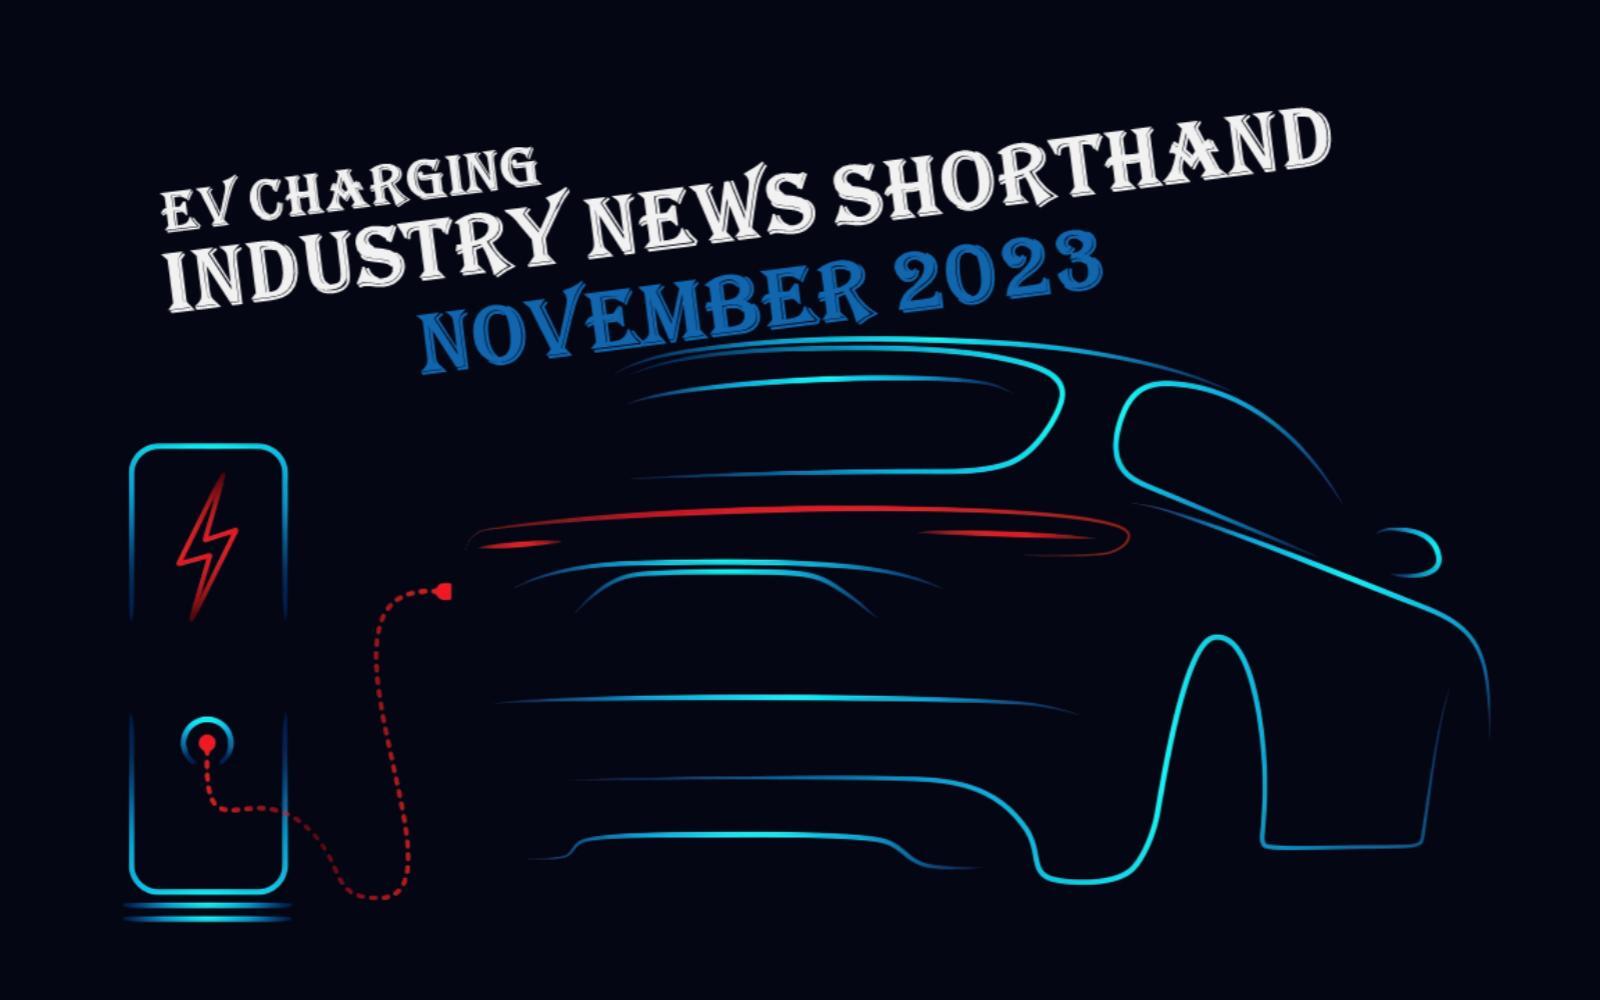 November 2023 EV charging industry news summary